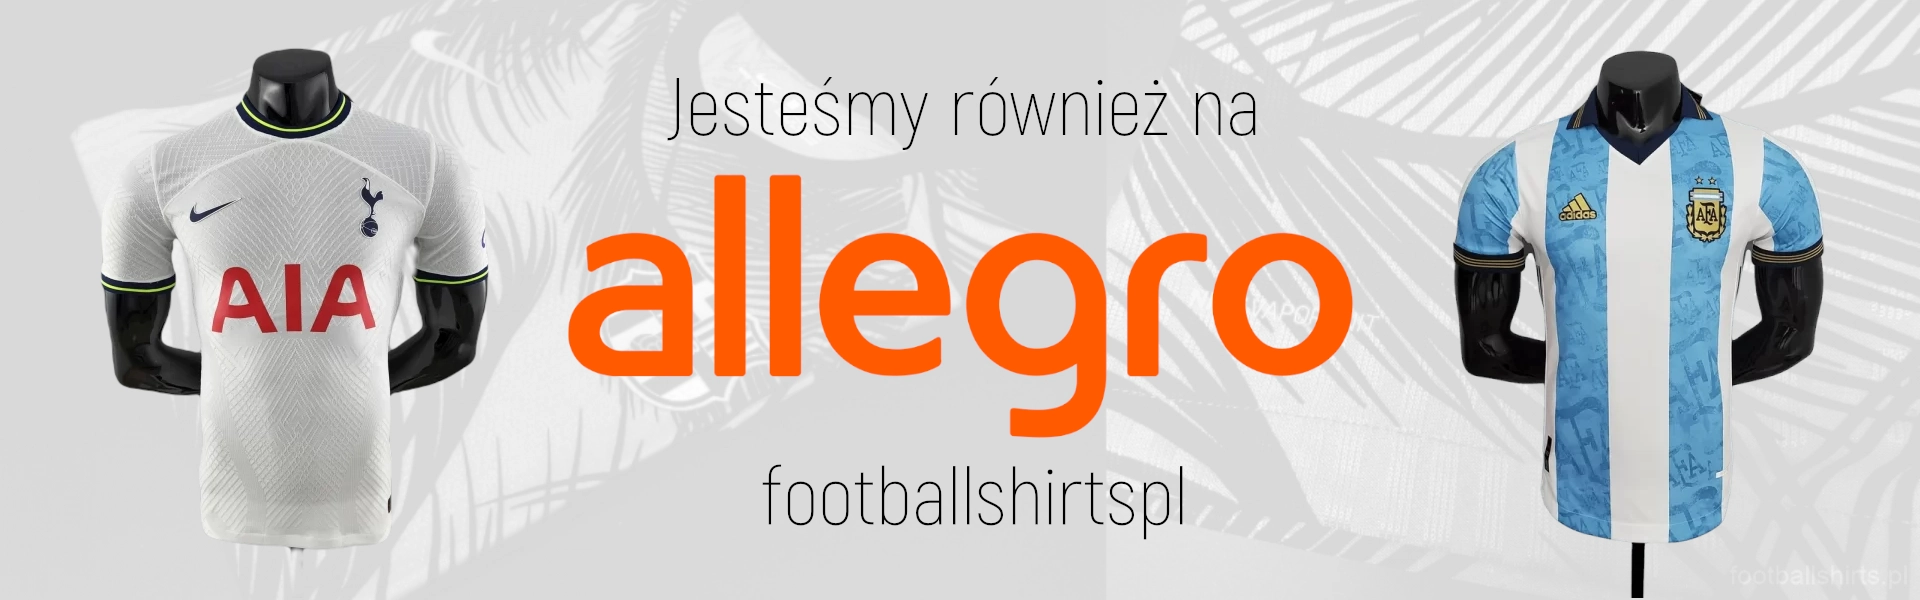 Jesteśmy również na Allegro - footballshirtspl